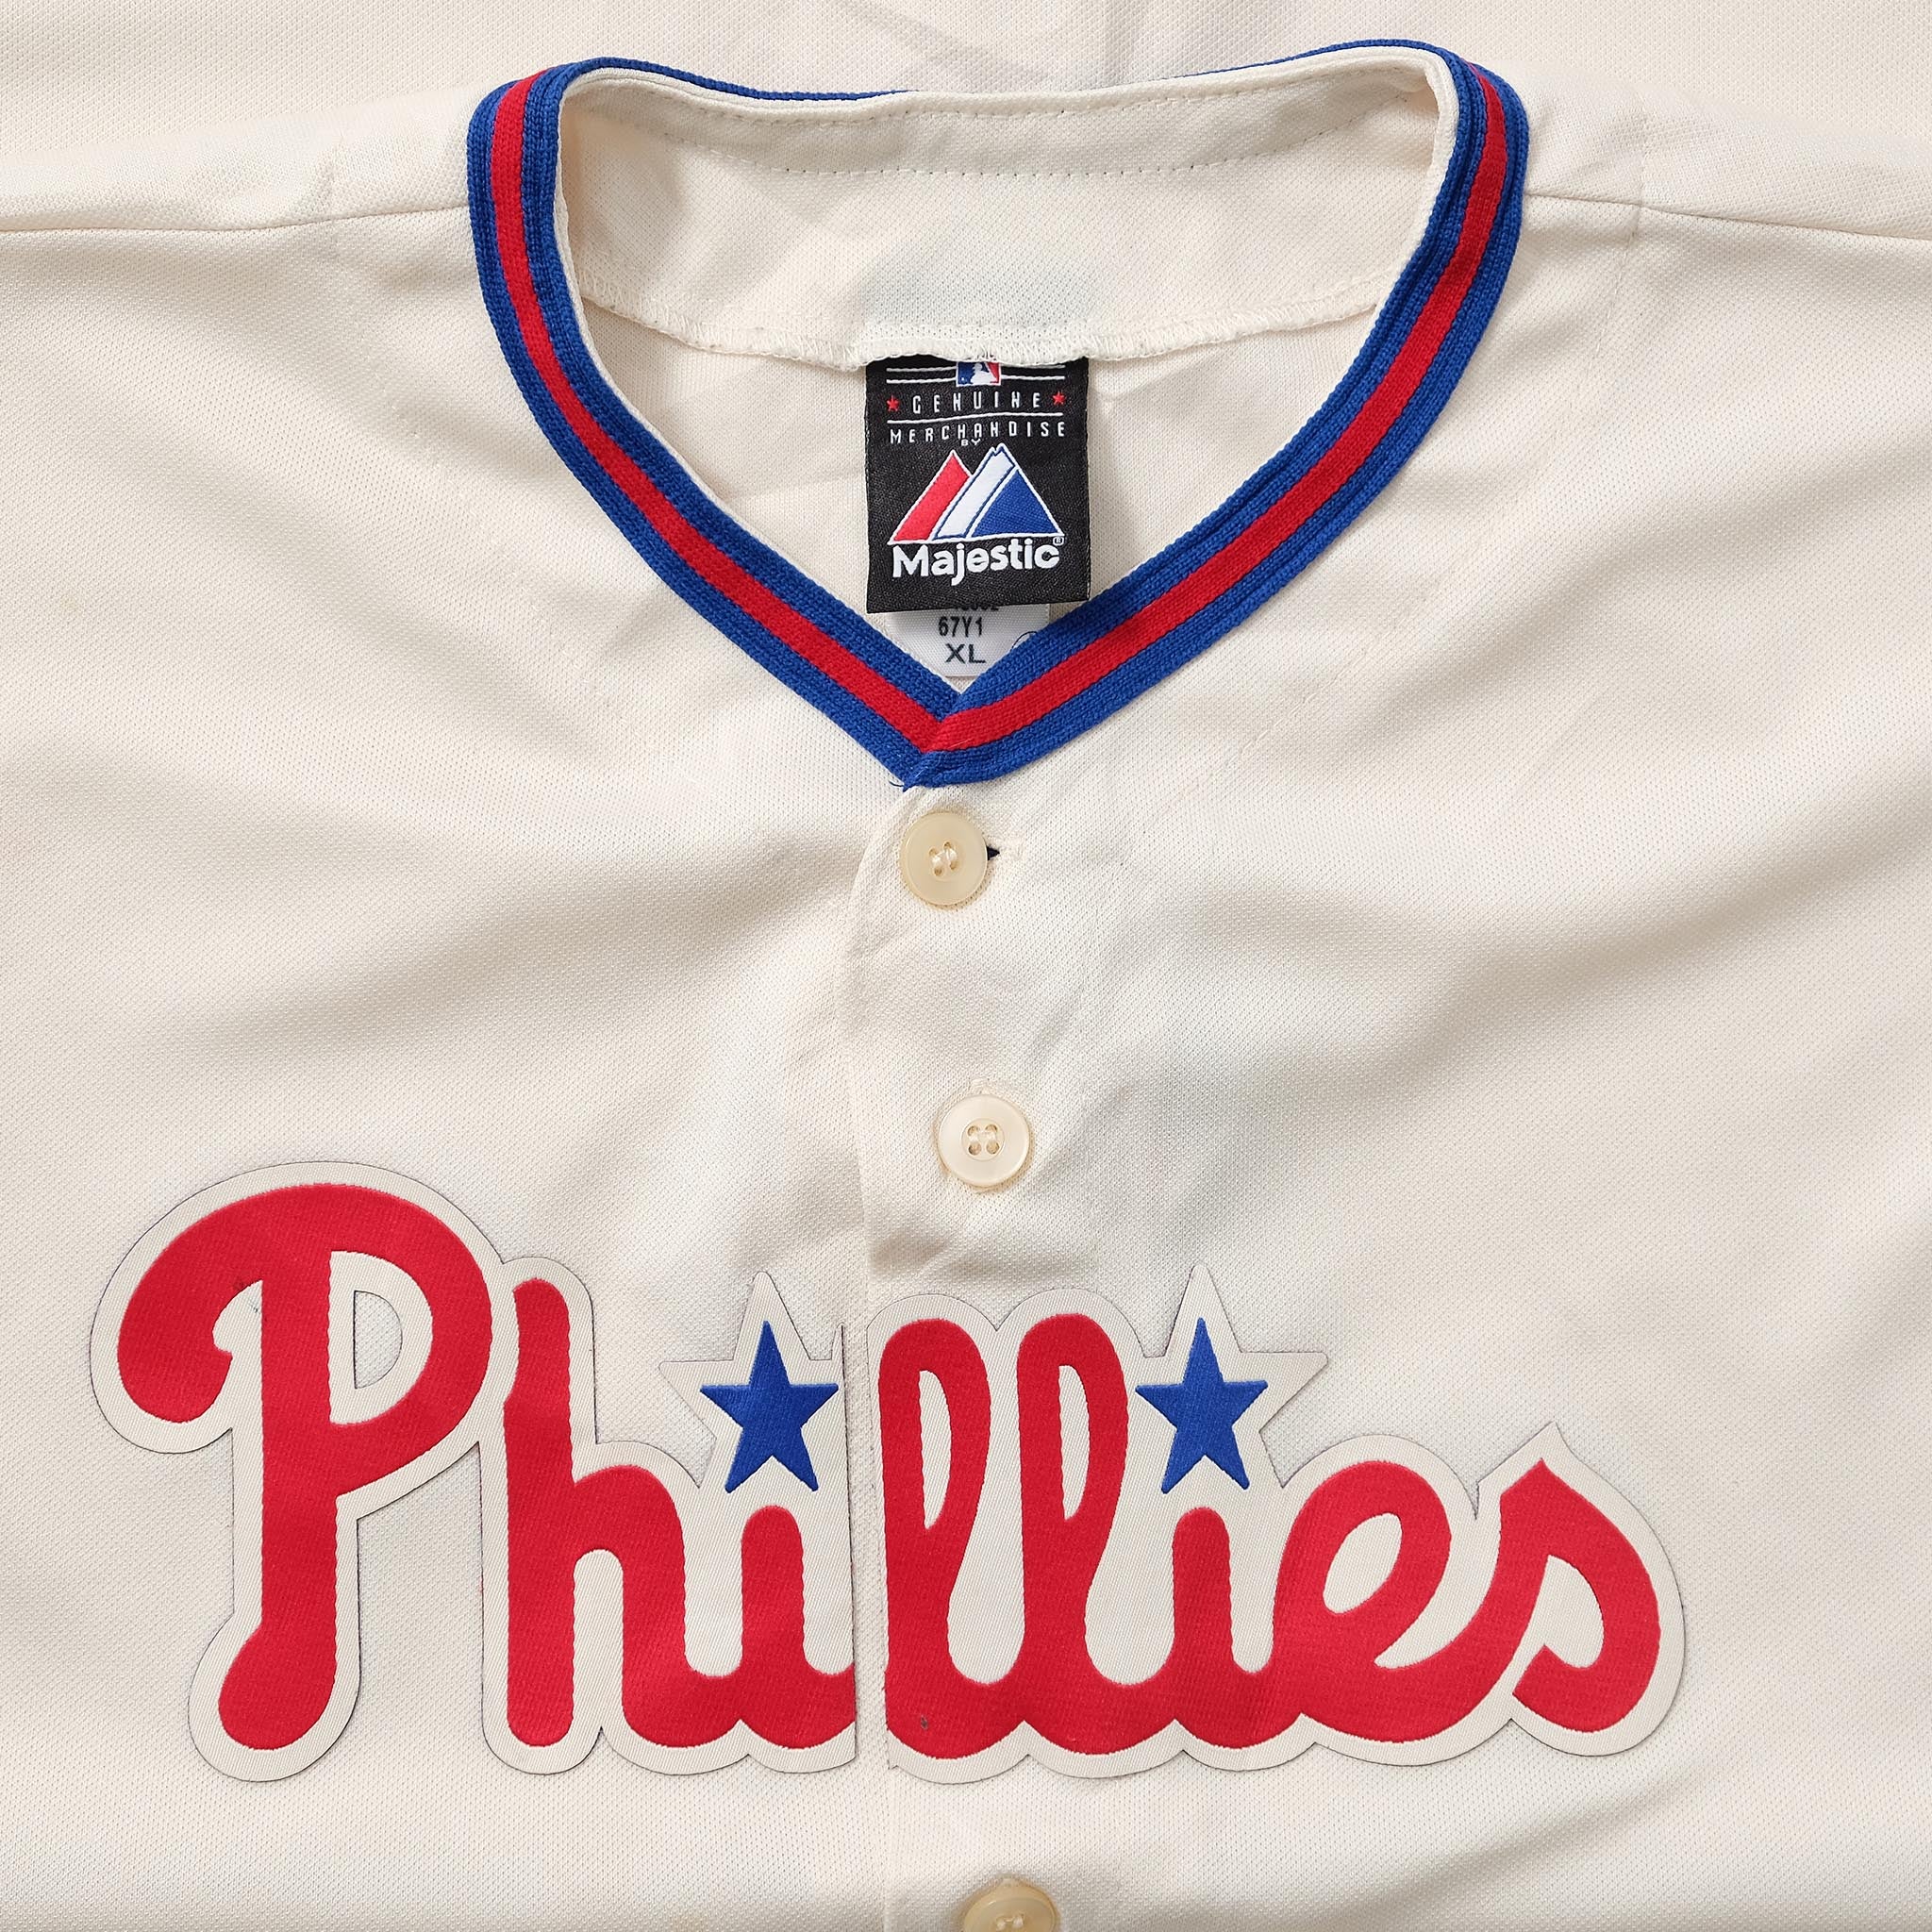 Majestic Phillies Baseball Jersey Shirt V Neck. Short Sleeve. Size  Women's Small